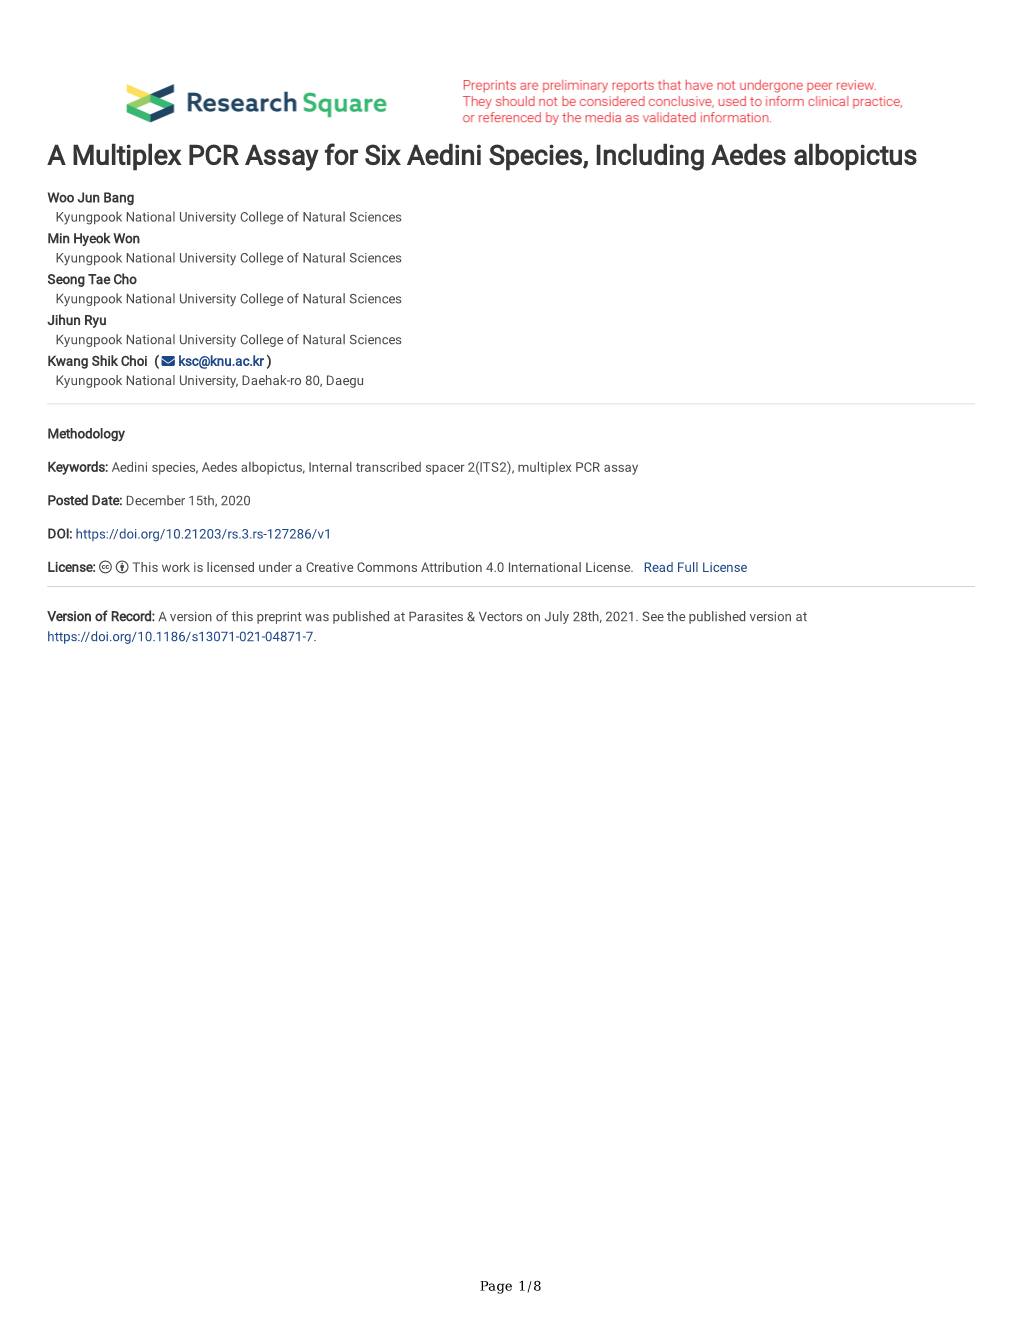 A Multiplex PCR Assay for Six Aedini Species, Including Aedes Albopictus